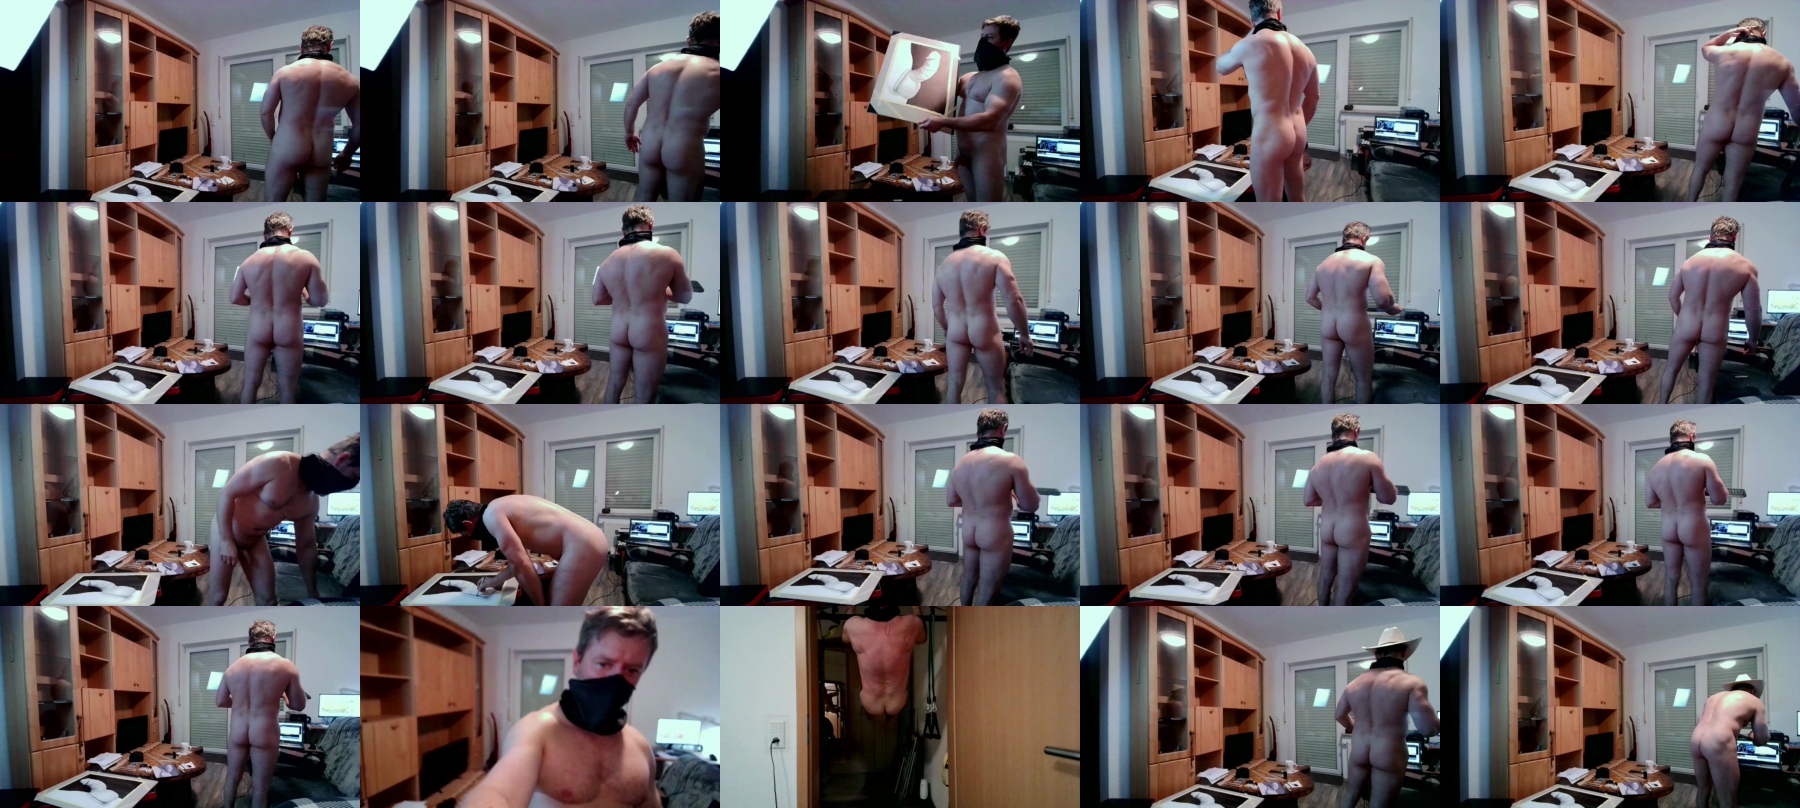 Garth_NakedArt  13-11-2021 Recorded Video Topless